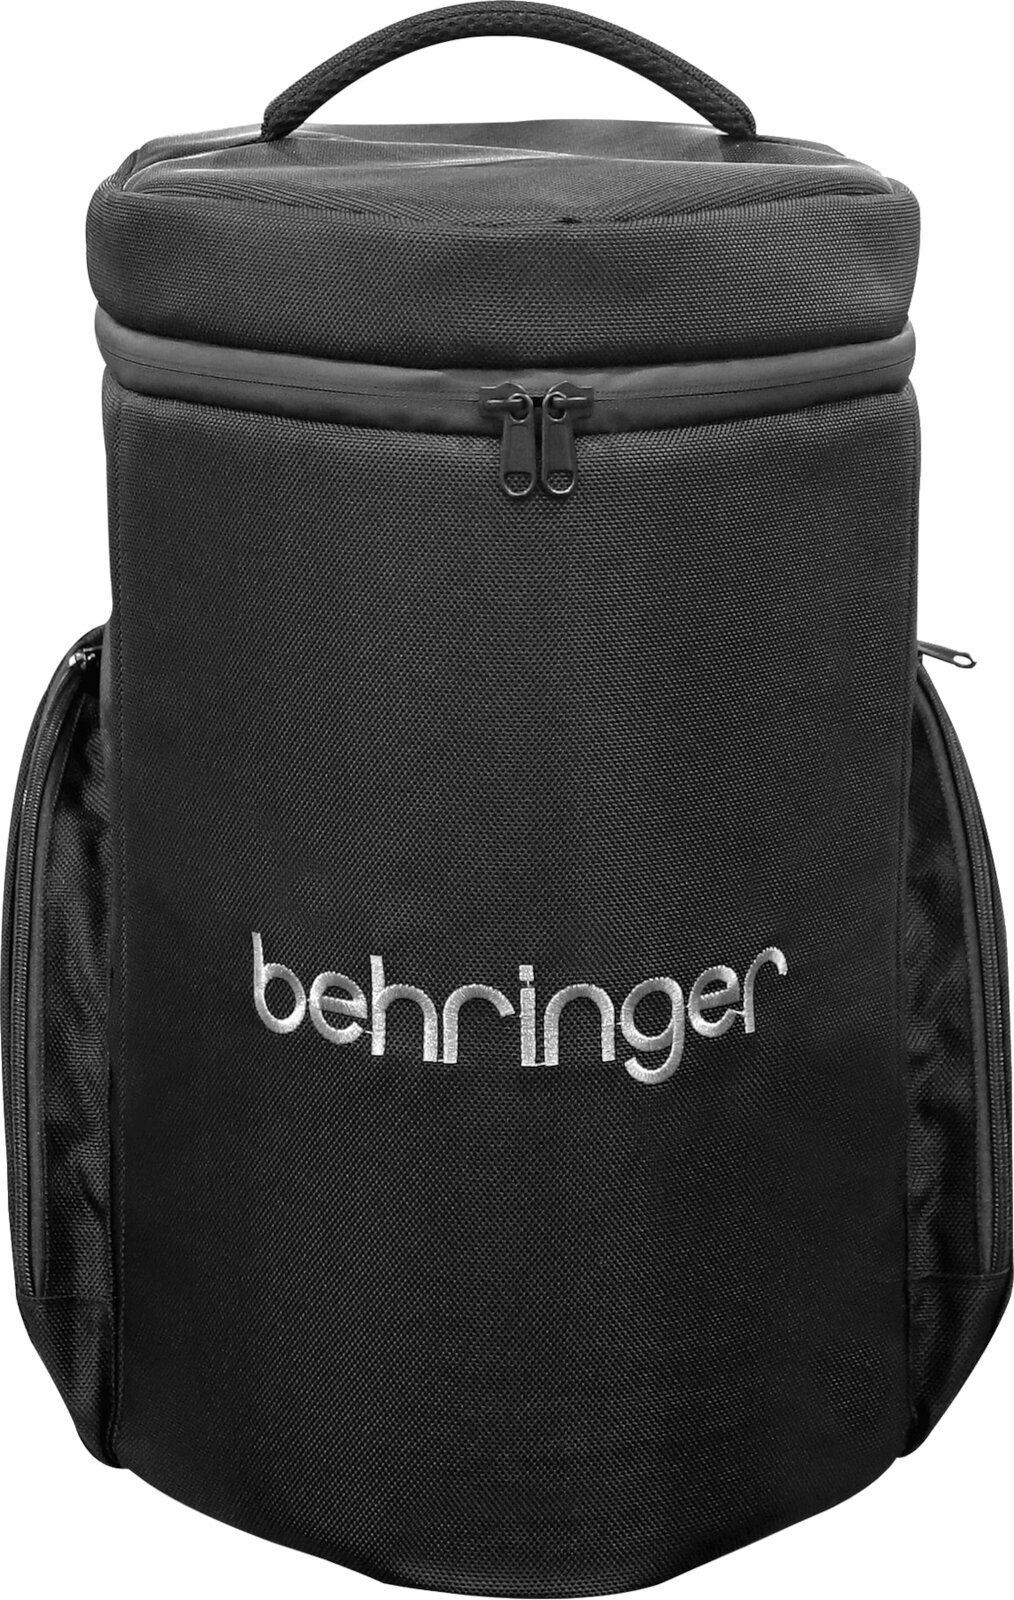 Torba / etui za avdio opremo Behringer B1 Backpack